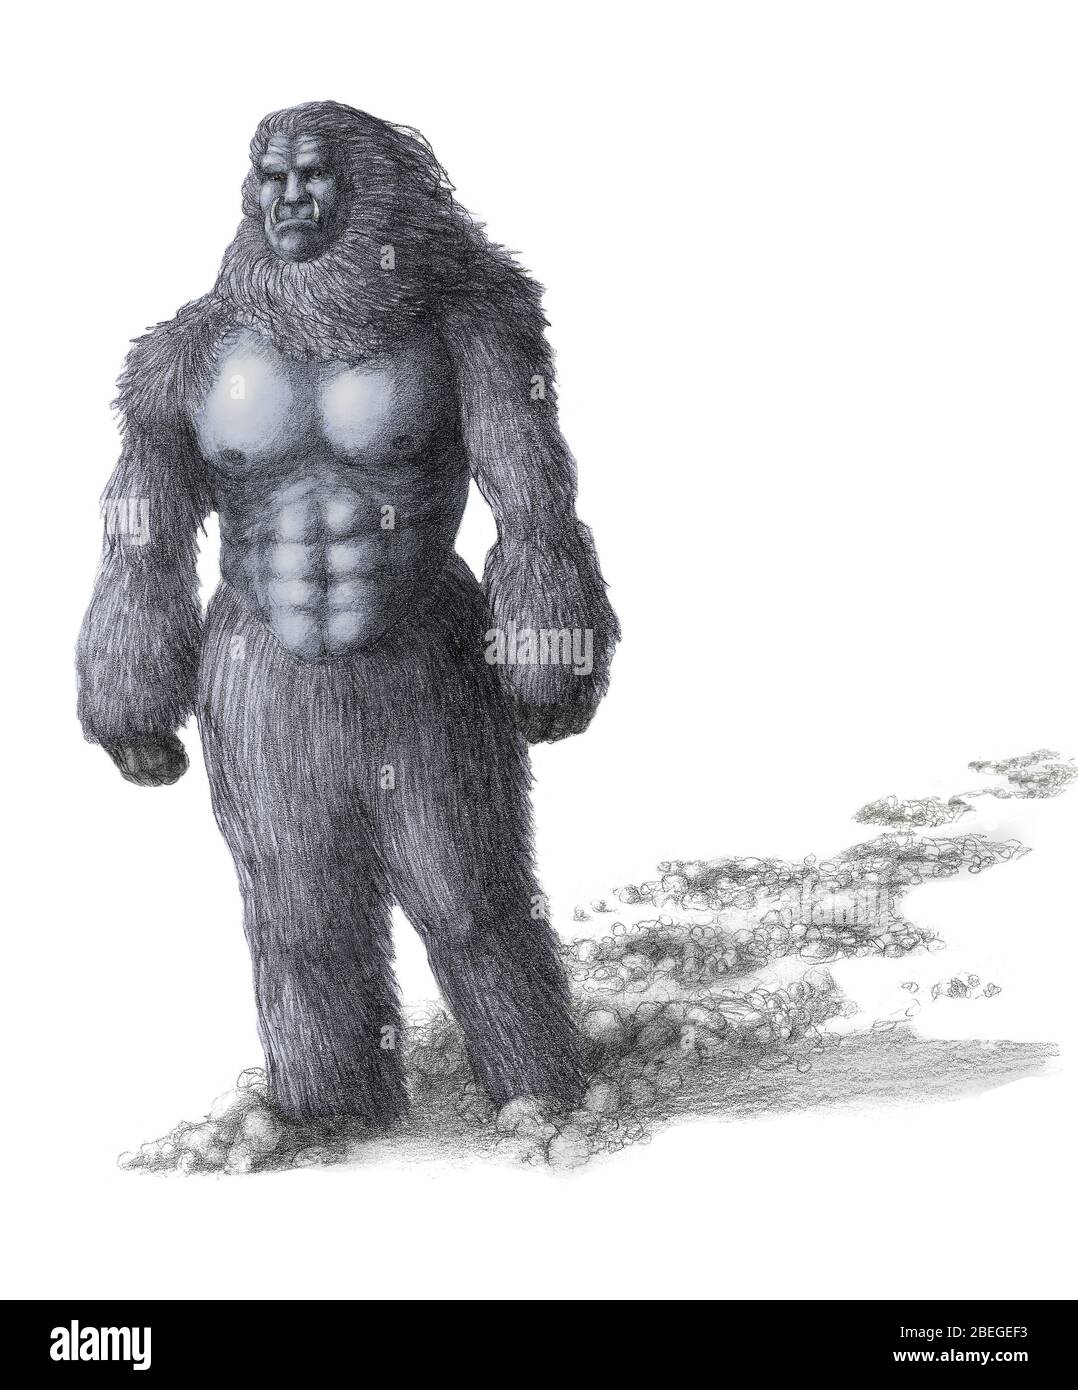 Yeti or Abominable Snowman Stock Photo